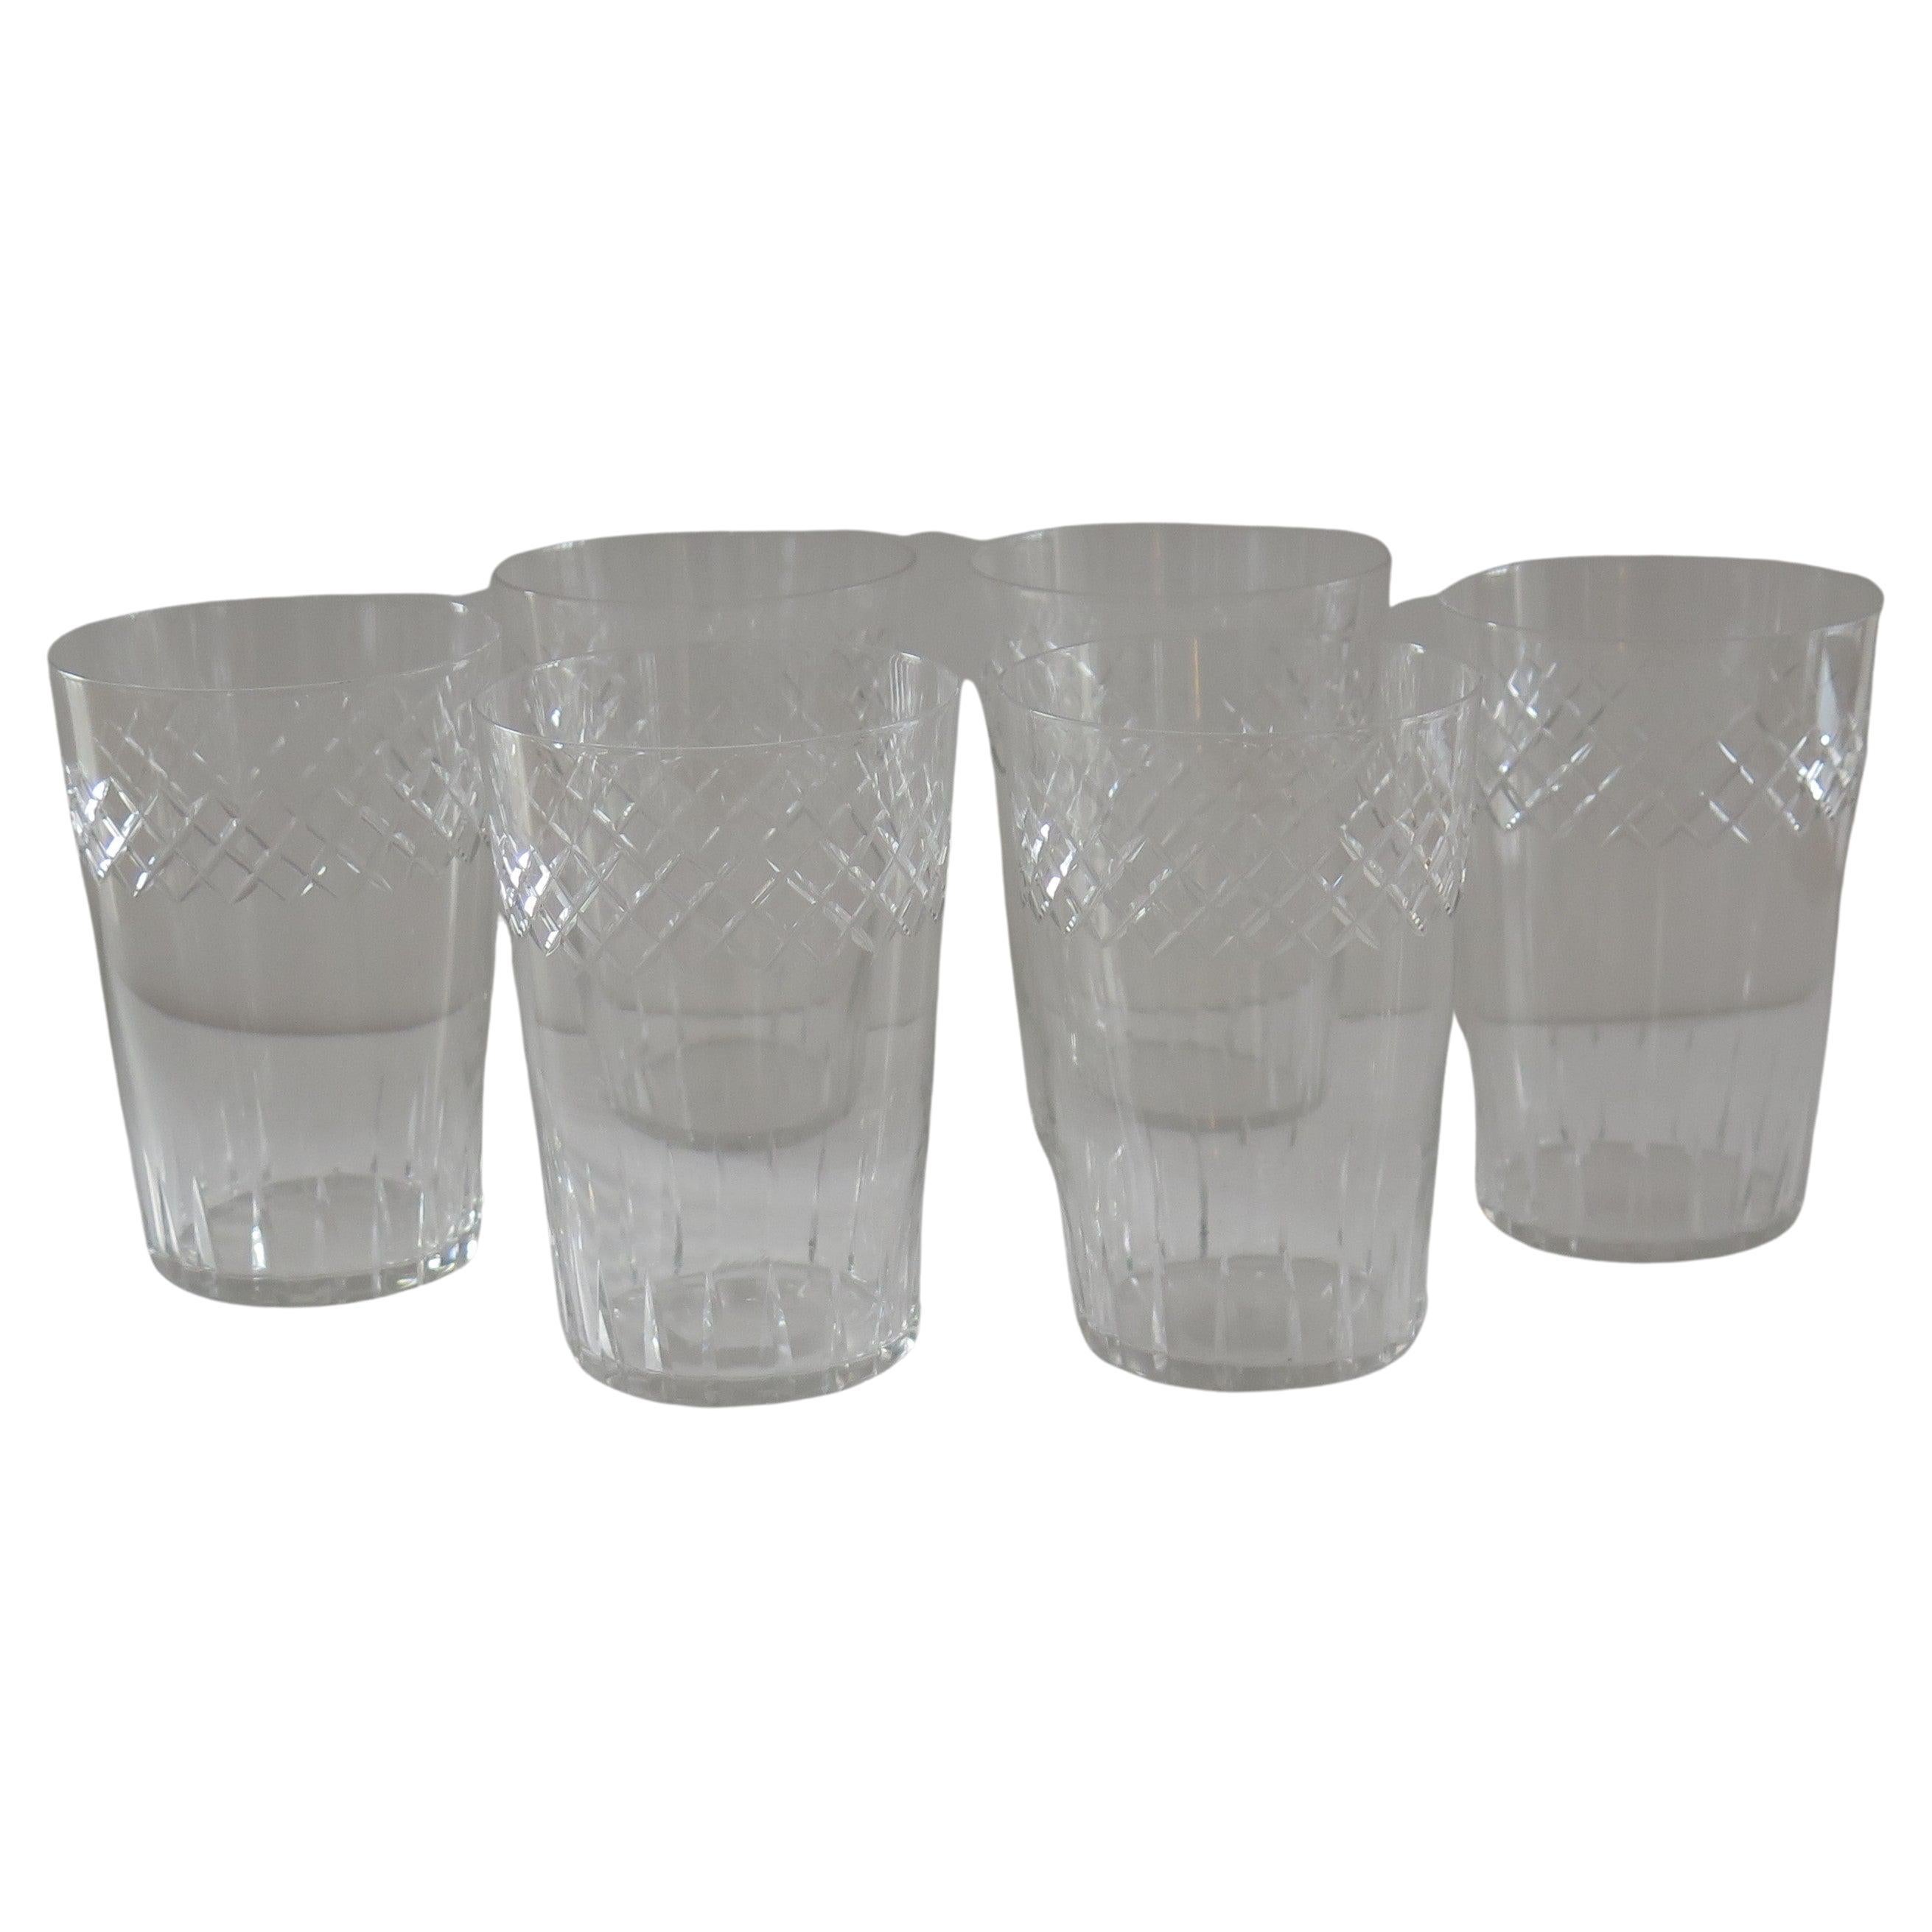 https://a.1stdibscdn.com/set-of-six-edwardian-glass-tumblers-engraved-drinking-glasses-circa-1905-for-sale/f_9903/f_257693921634660905776/f_25769392_1634660906695_bg_processed.jpg